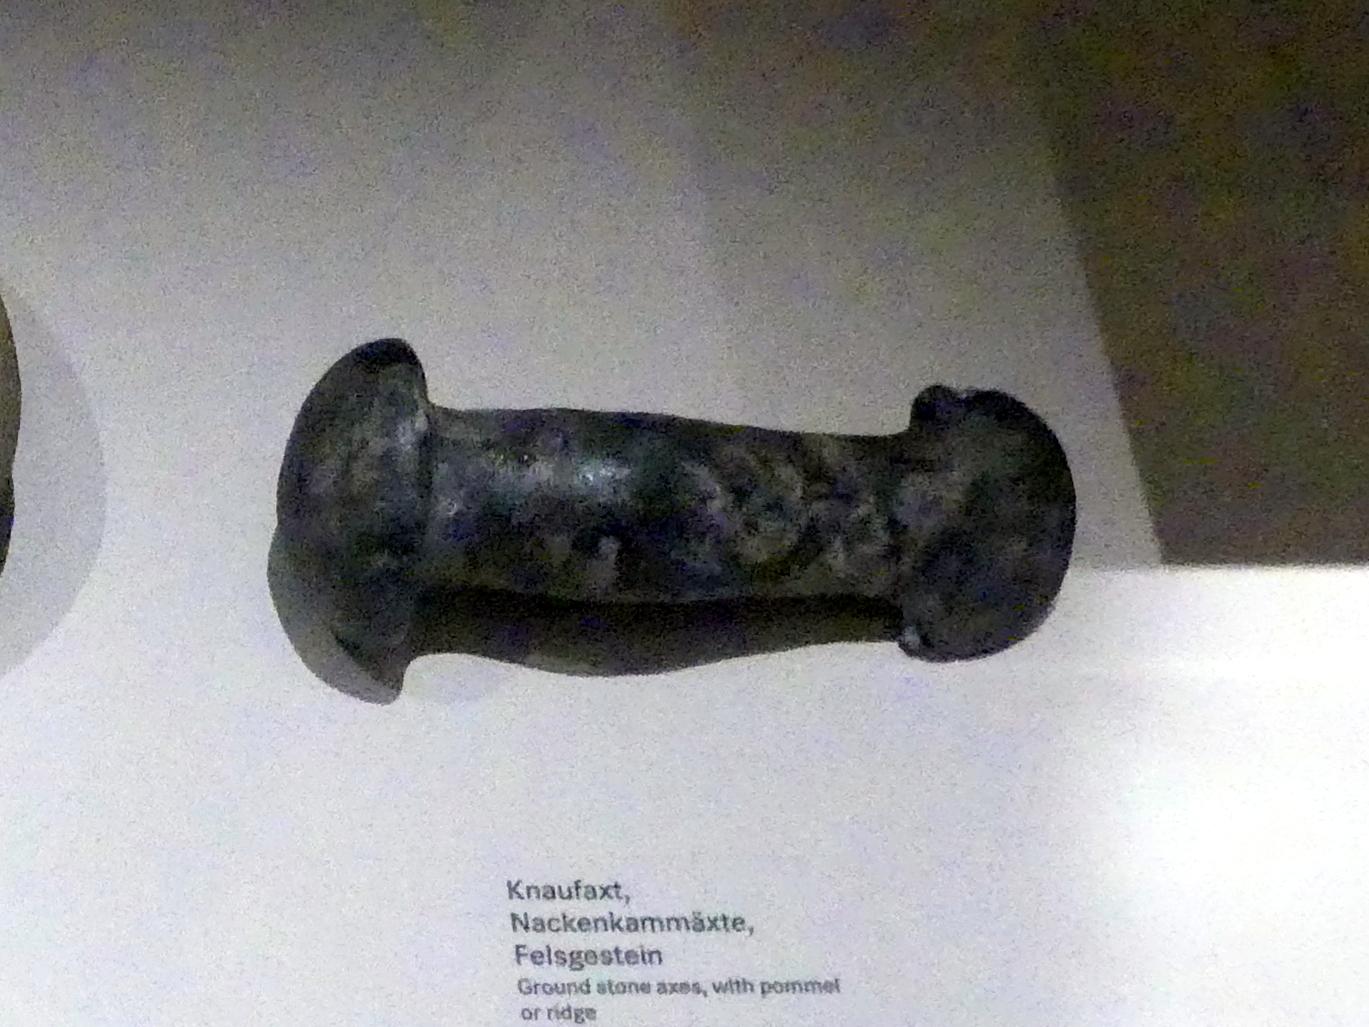 Knaufaxt, Nordisches Neolithikum, 4400 - 2350 v. Chr., 2800 - 2350 v. Chr.